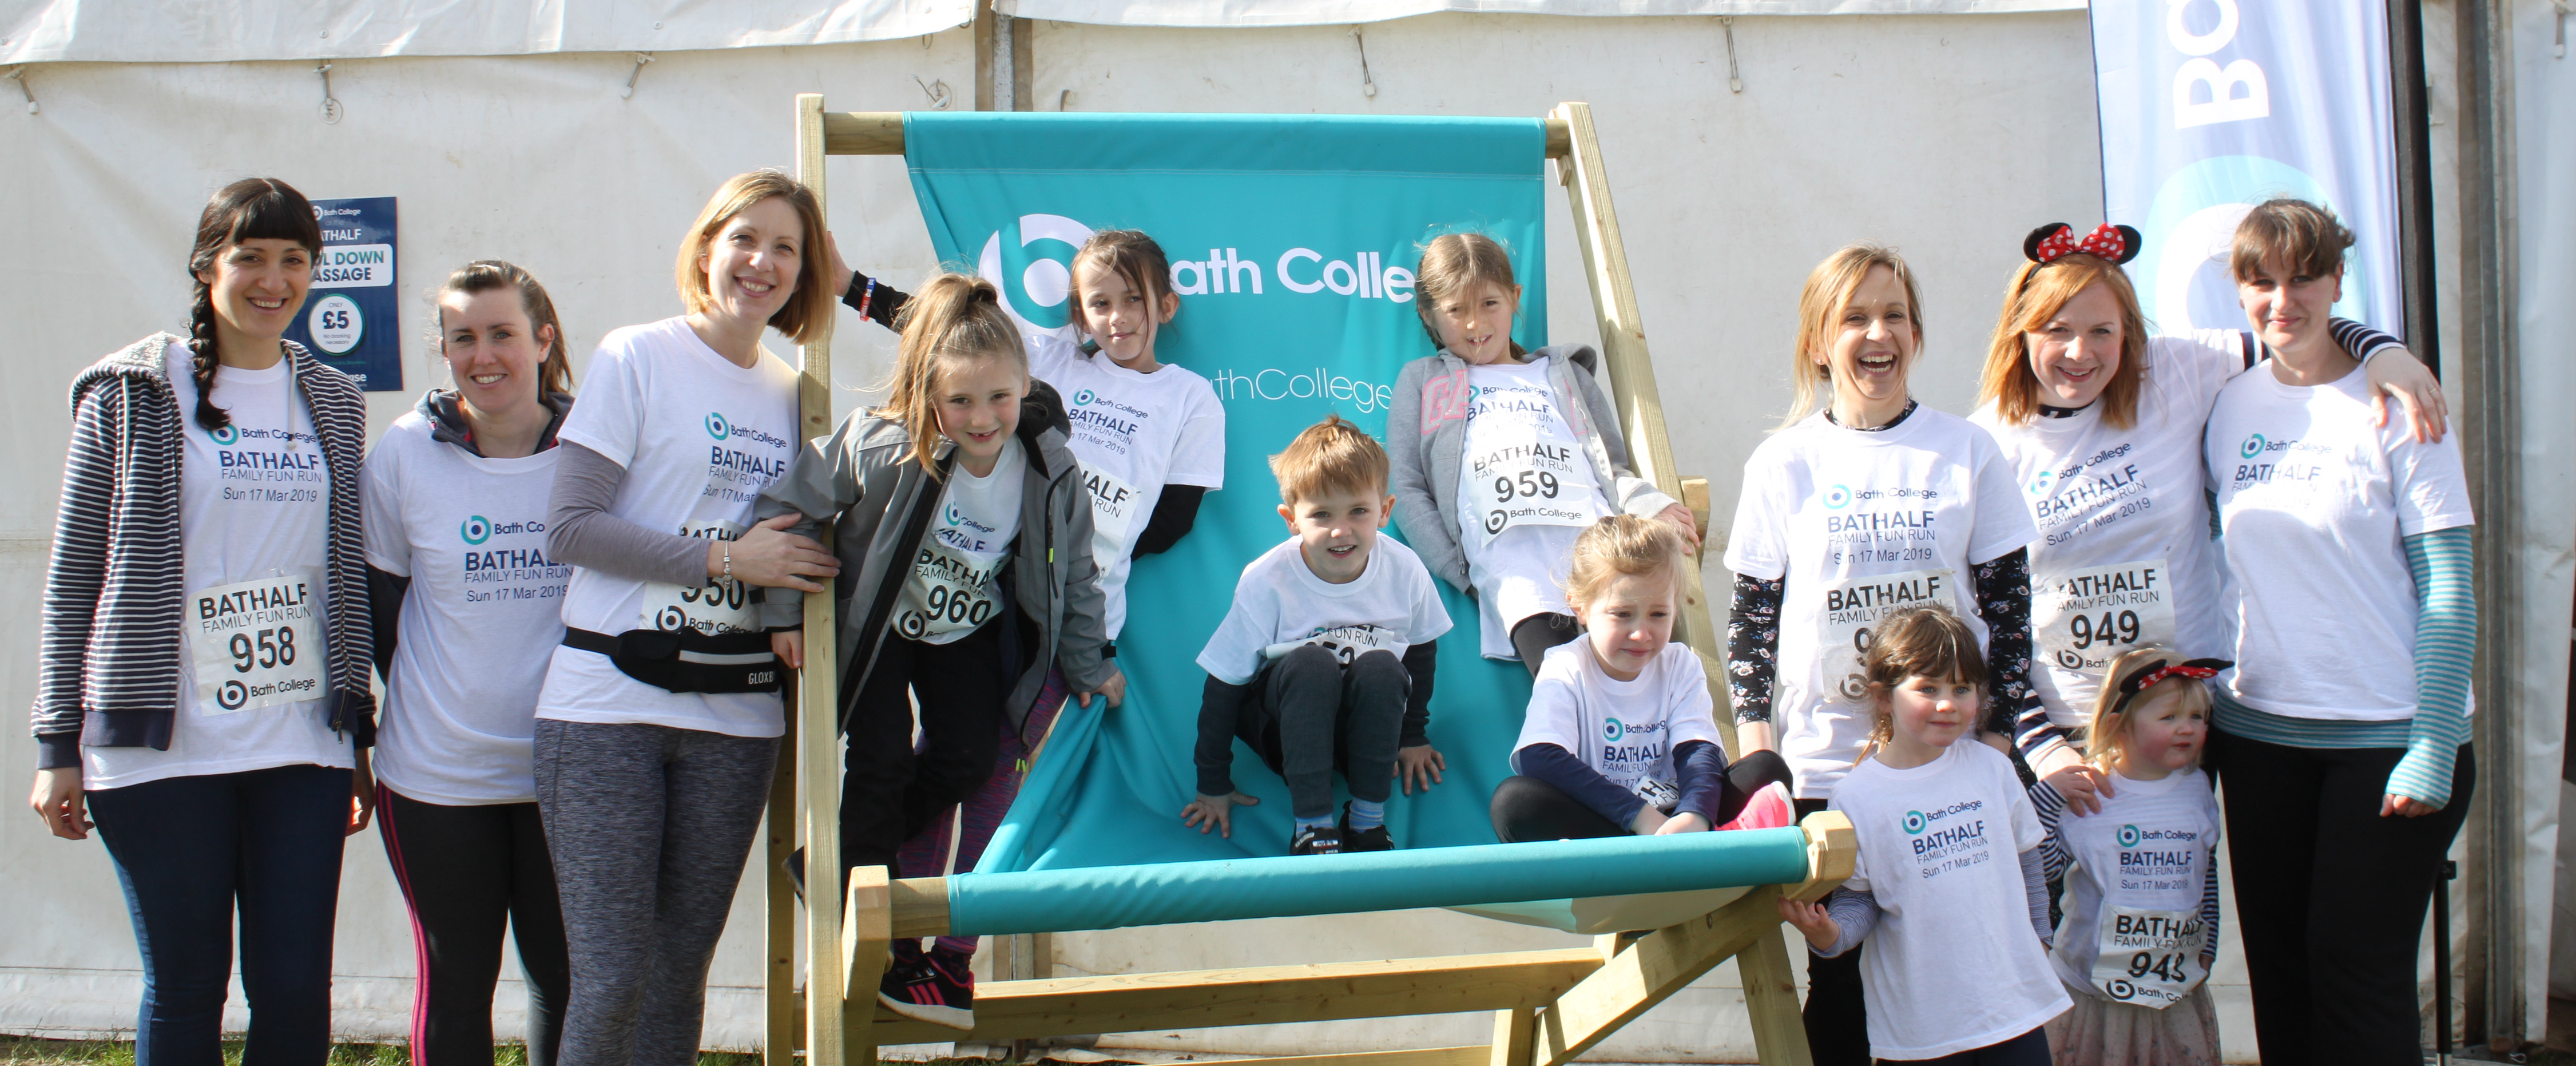 Bath College staff and their children on the deckchair after the fun run